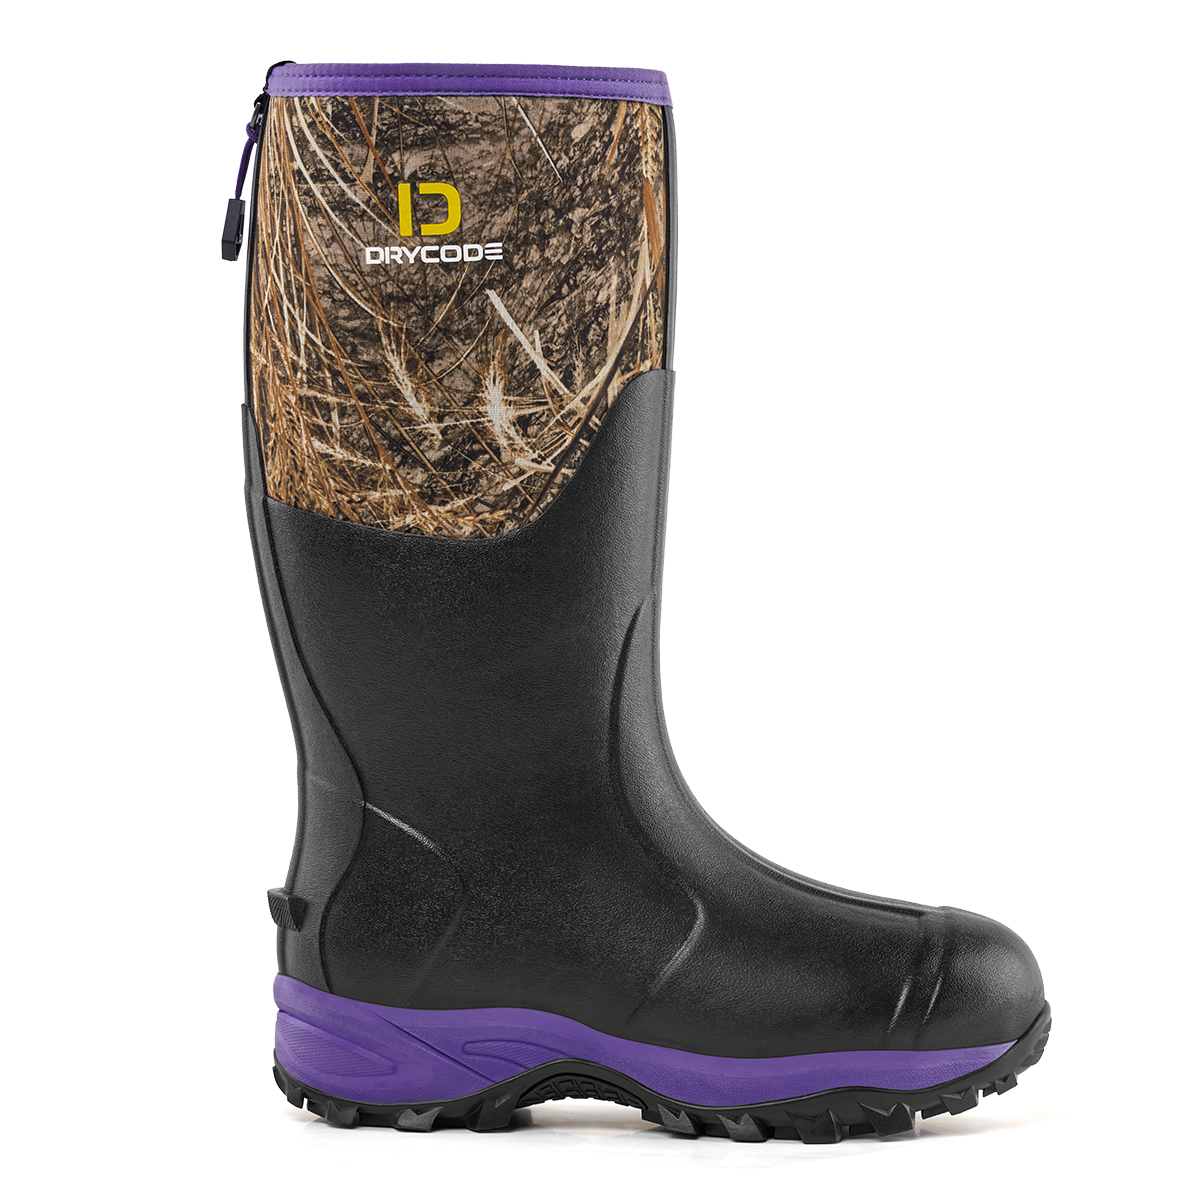 DRYCODE Tall Rubber Boots (Purple) with Steel Shank, 6mm Neoprene Women Rain Boots